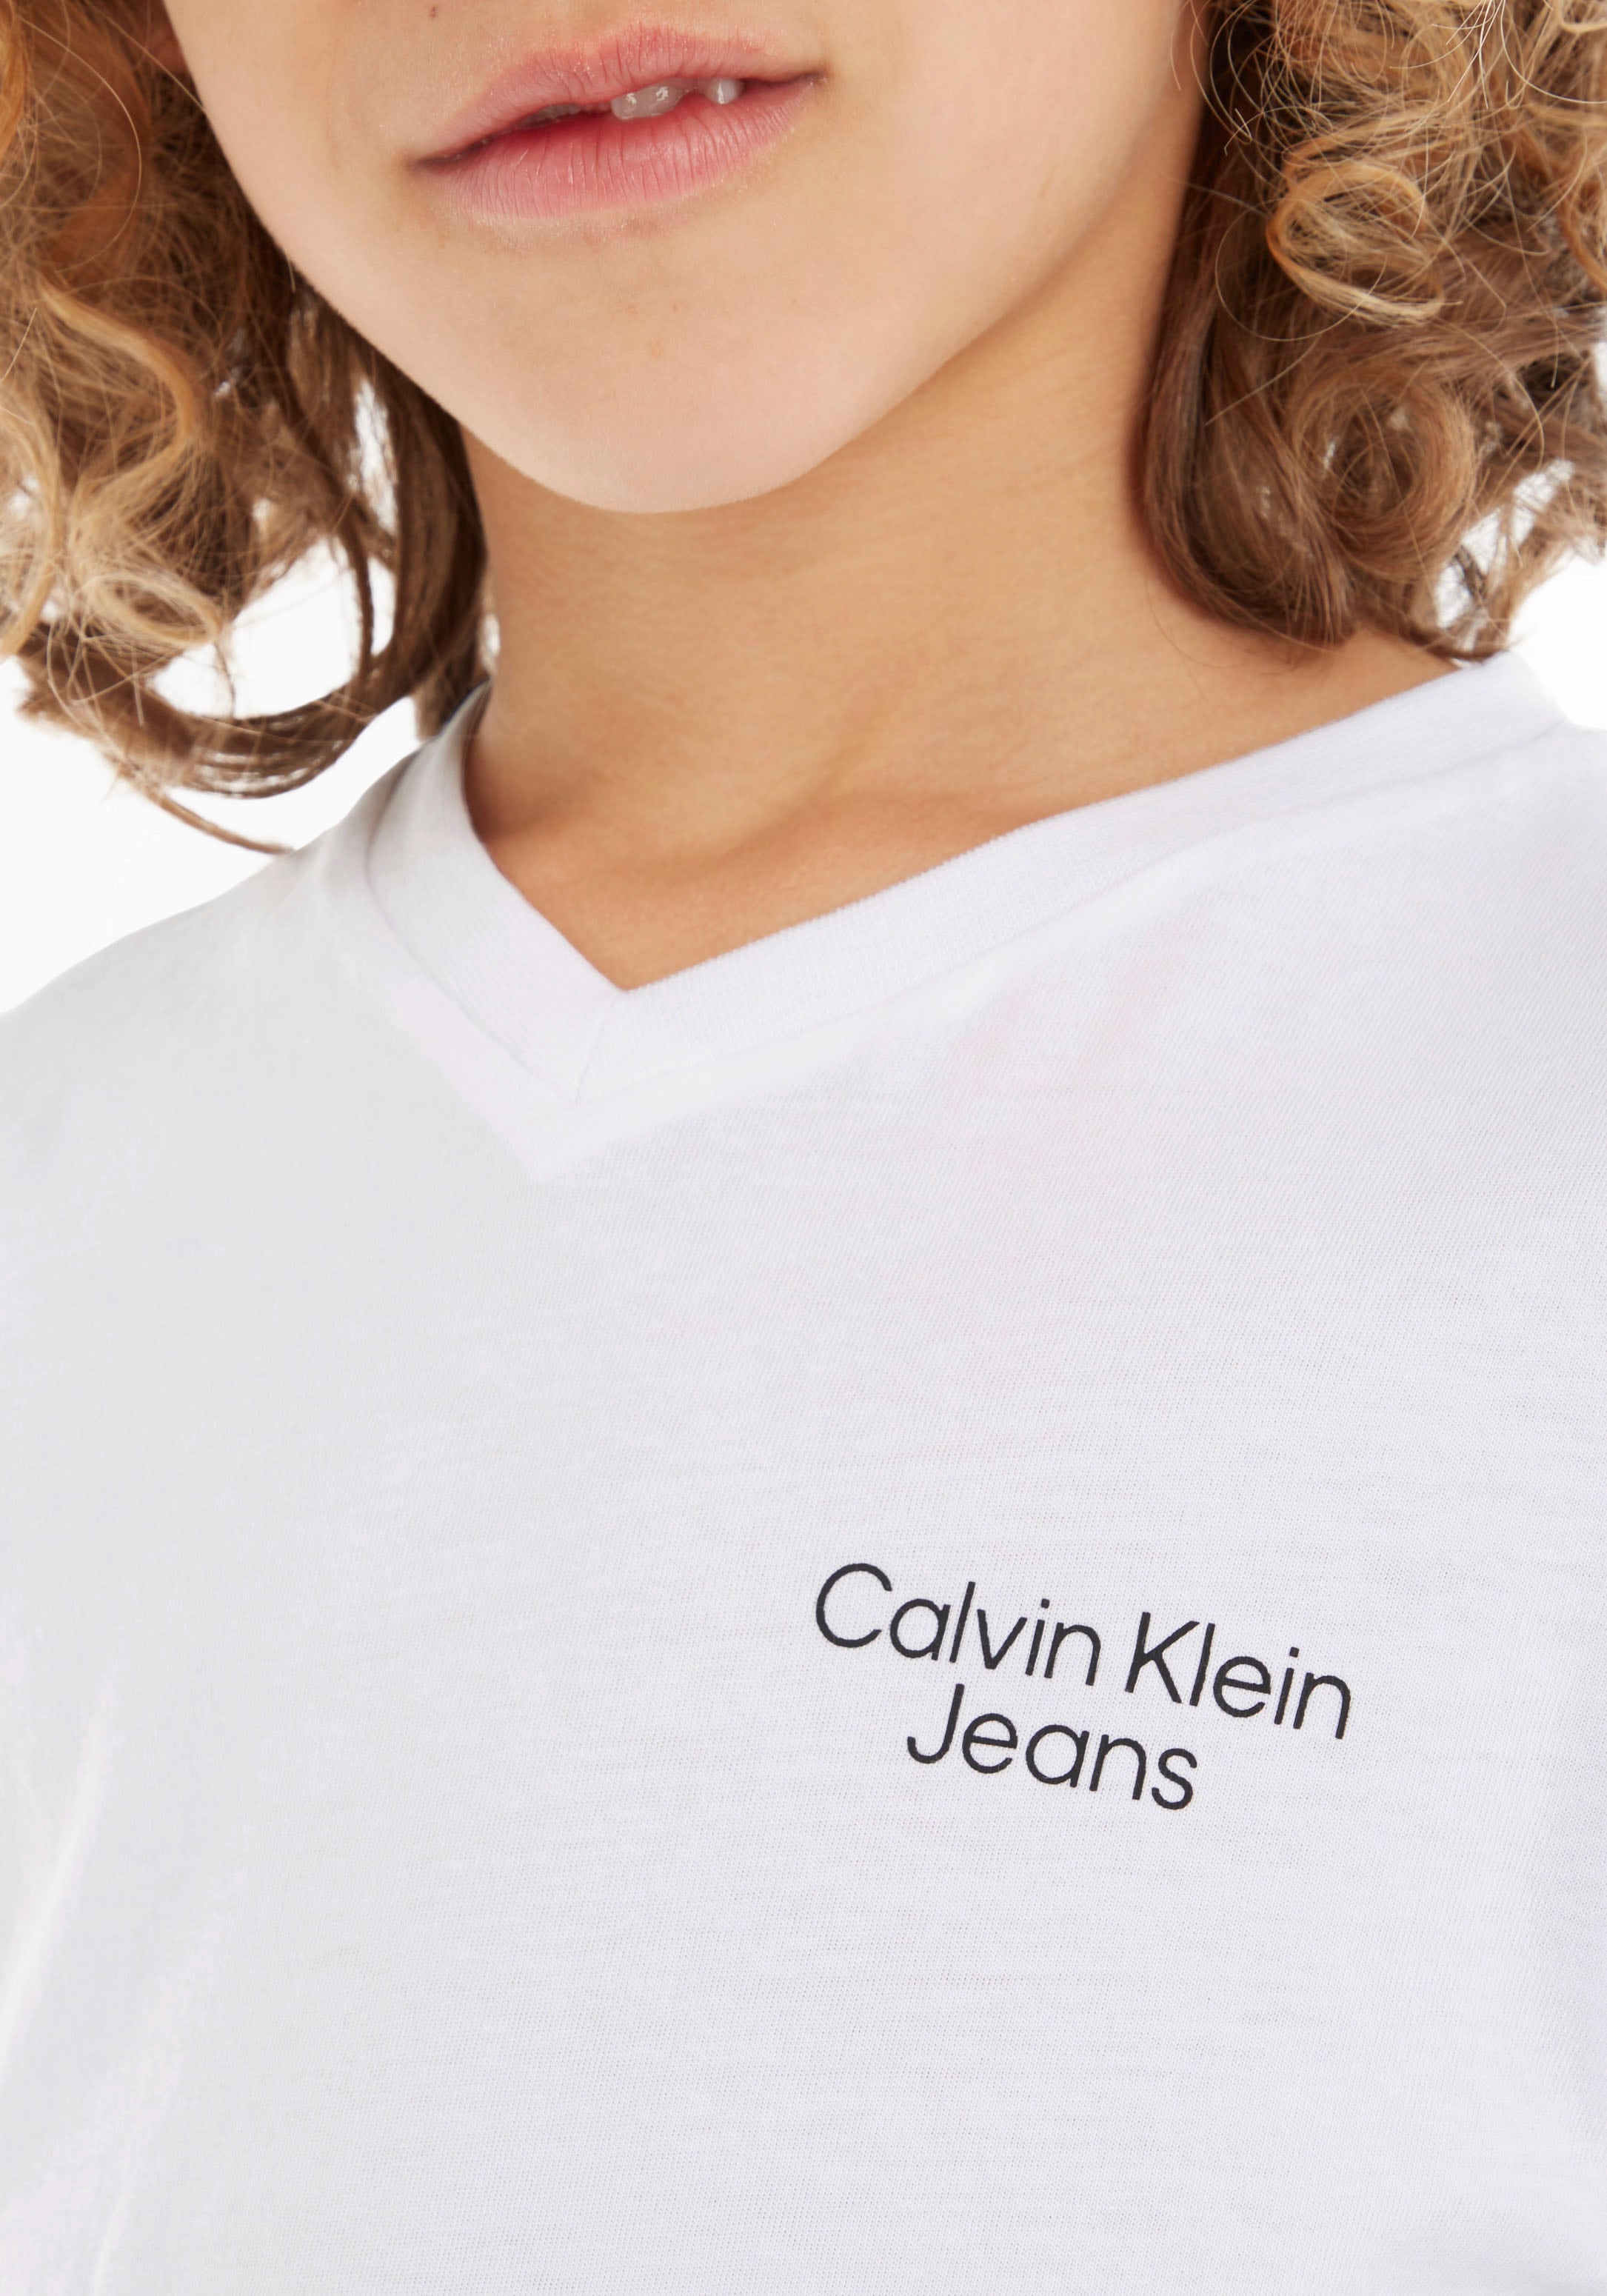 V-NECK T-SHIRT« Jeans STACK LOGO Calvin »CKJ online BAUR kaufen | Klein T-Shirt